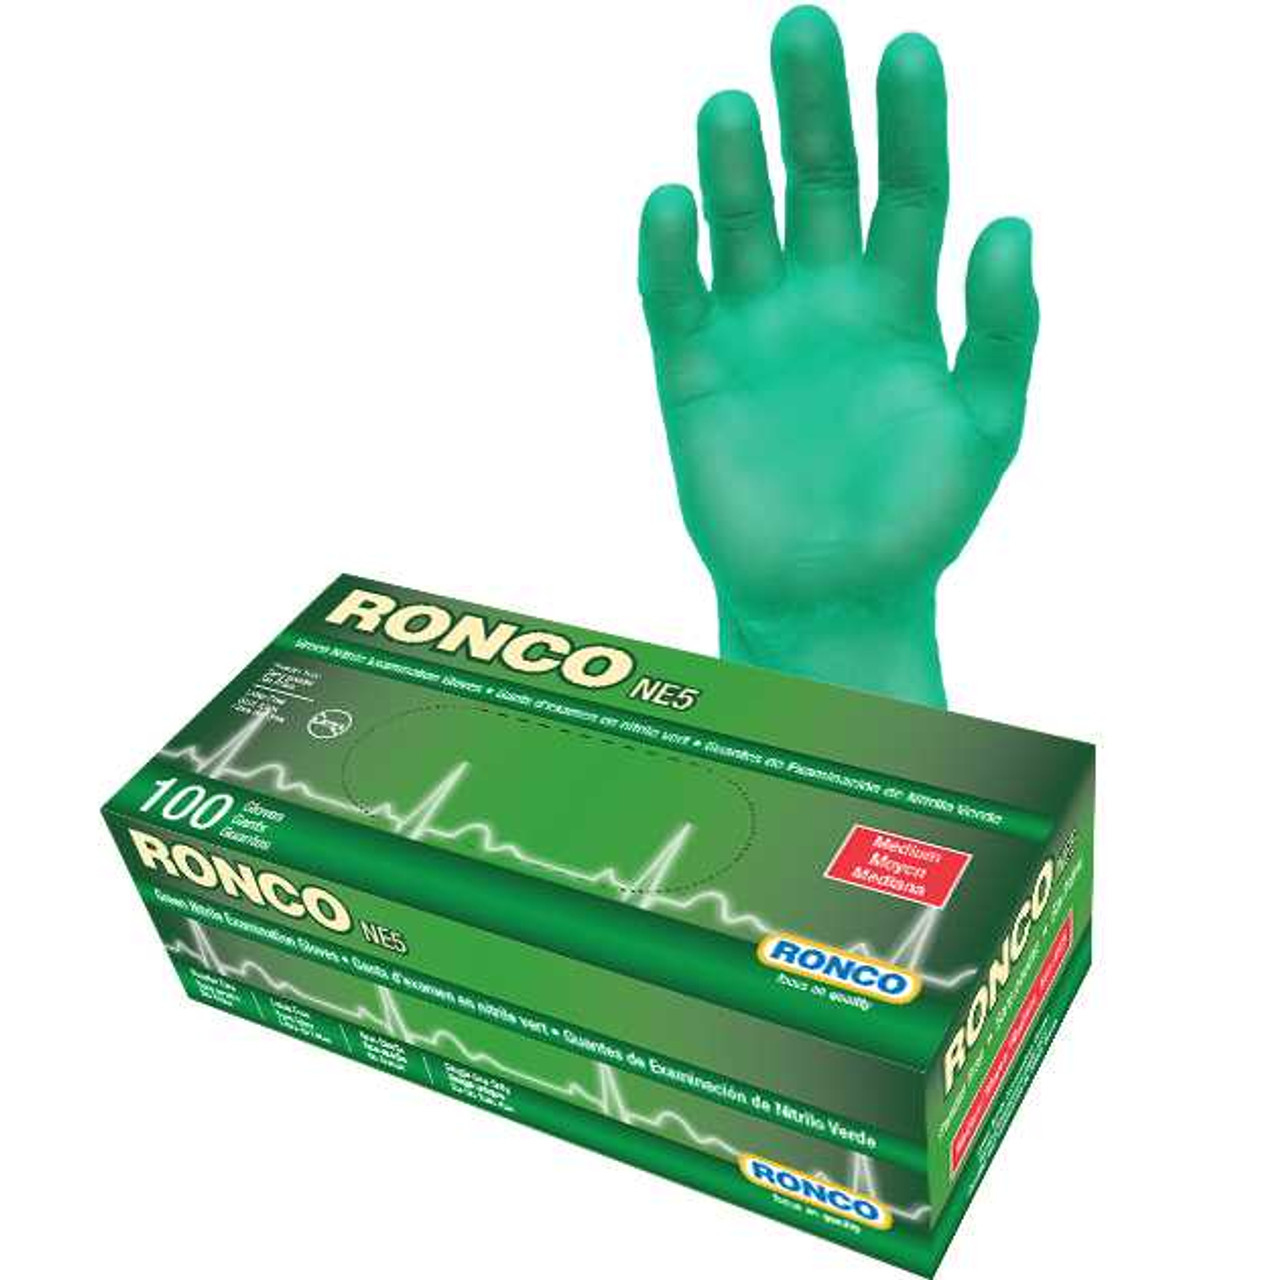 RONCO NE5, Green Nitrile Examination Glove - 5 mil (1,000 gloves / case)